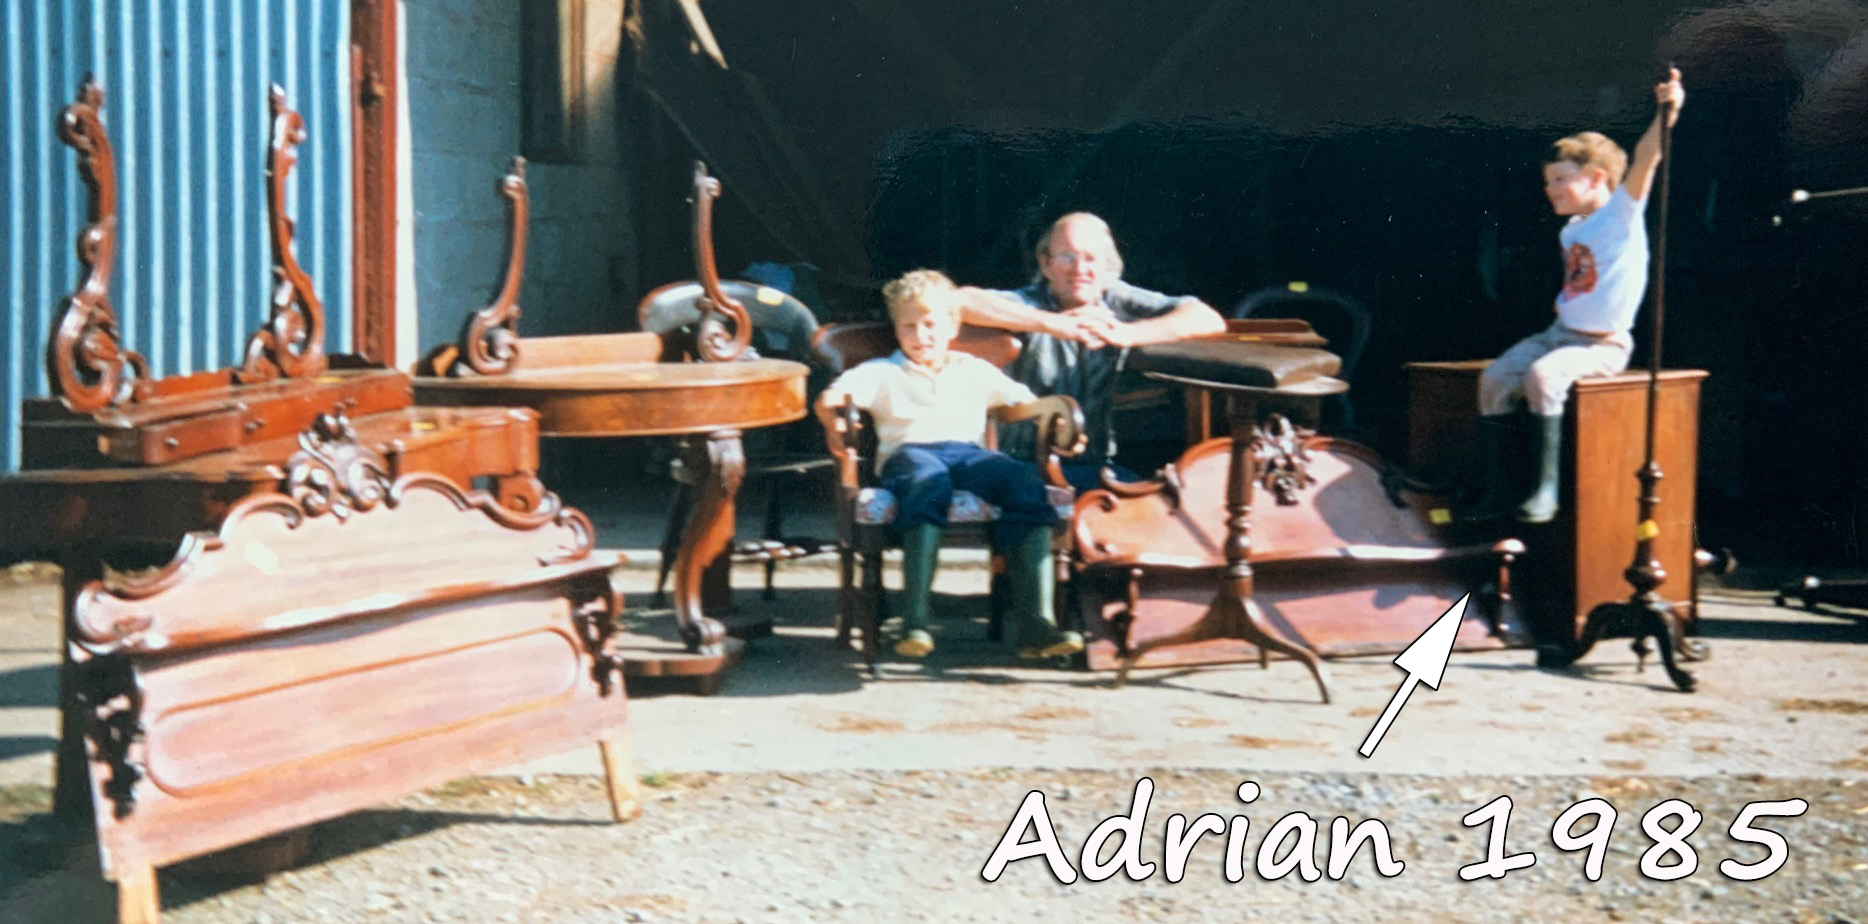 Adrian 1985